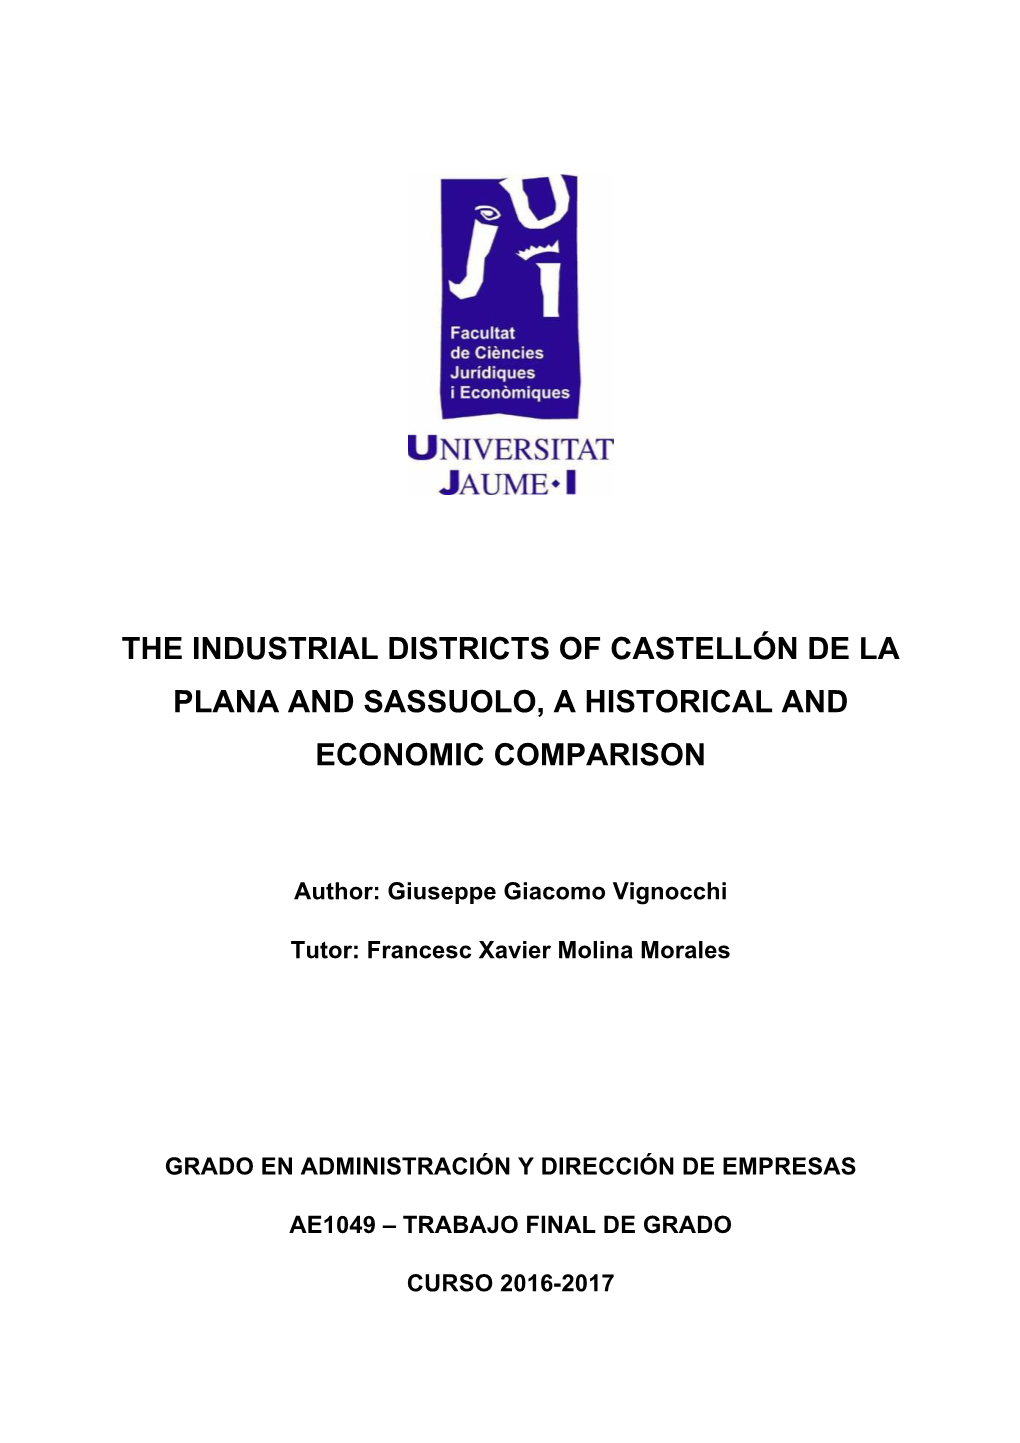 The Industrial Districts of Castellón De La Plana and Sassuolo, a Historical and Economic Comparison